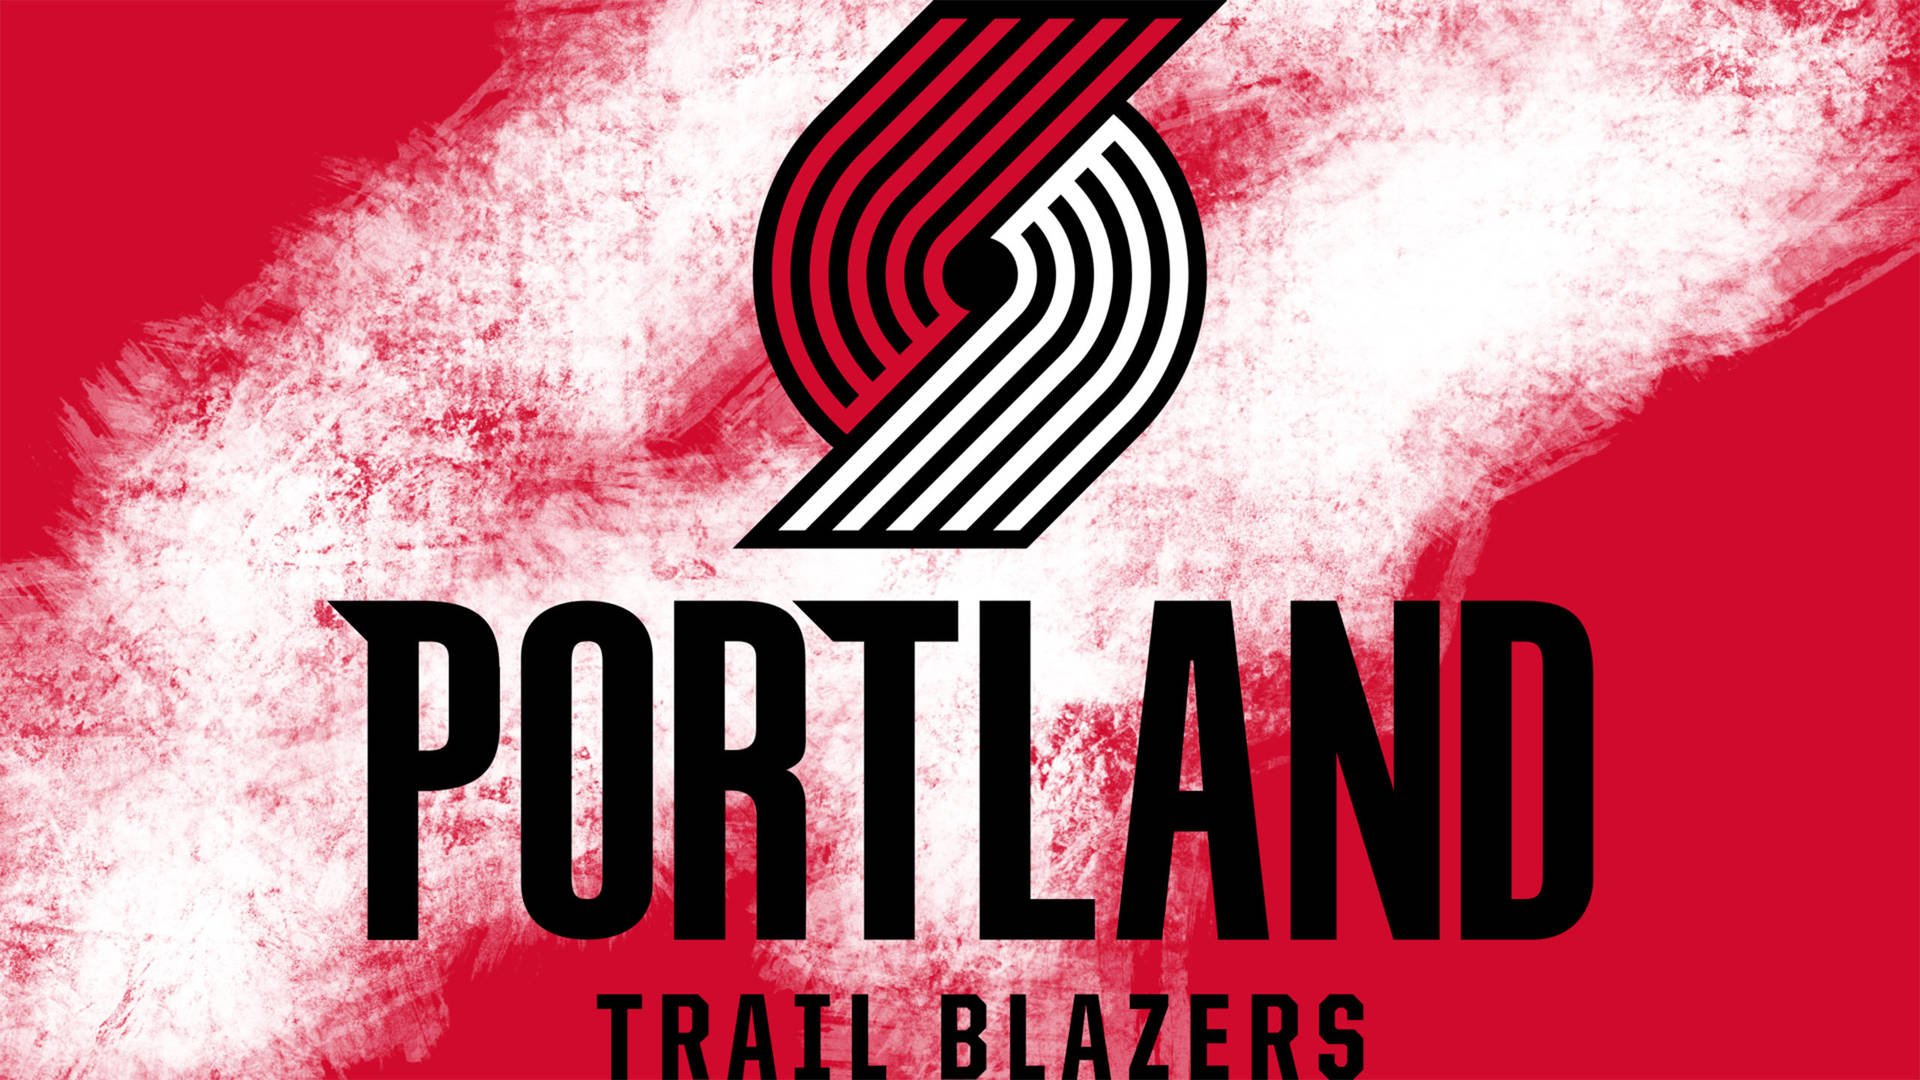 Portland Trail Blazers Reddish White Background Background